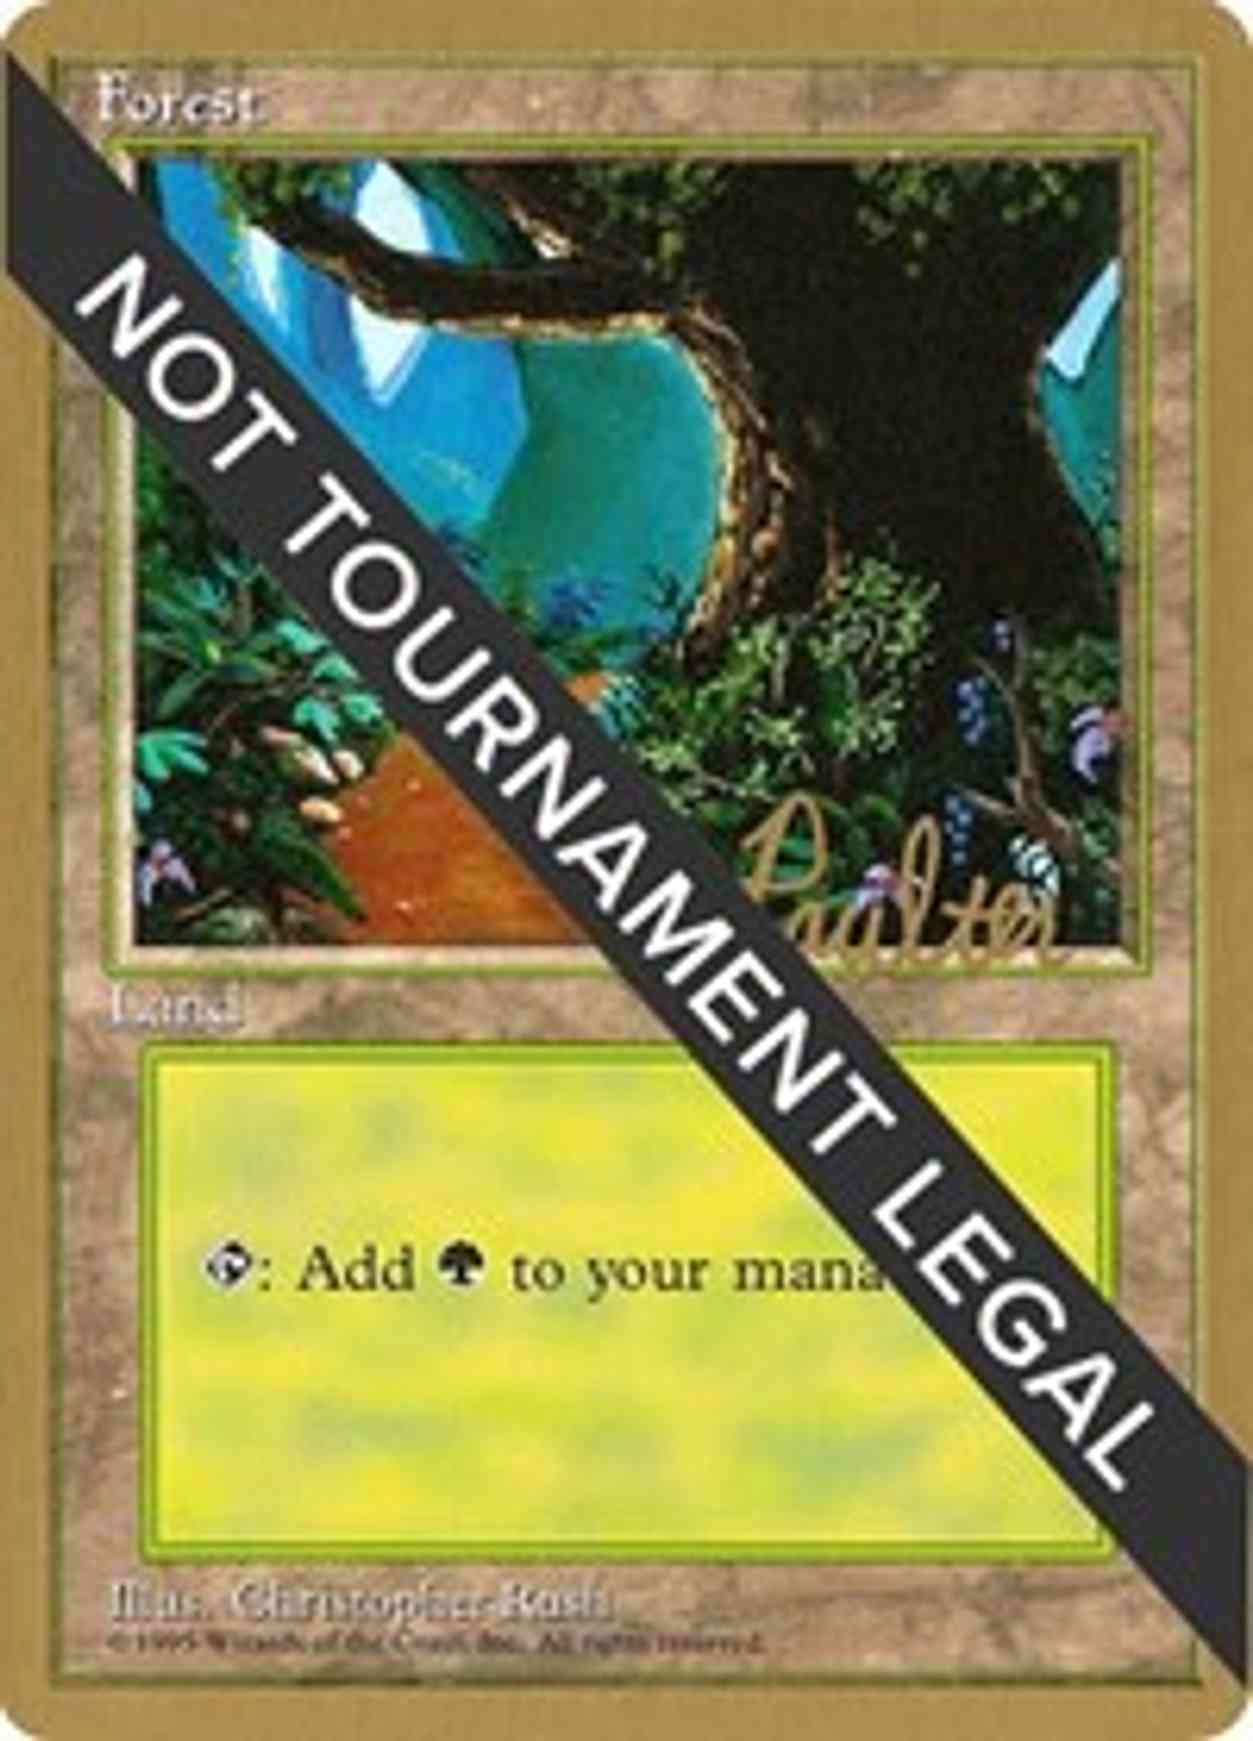 Forest (B) - 1996 Preston Poulter (4ED) magic card front